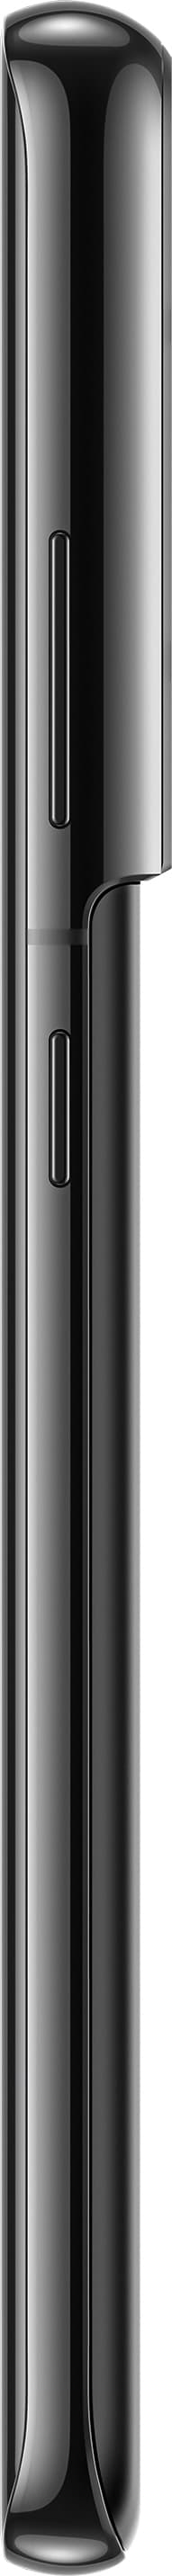 Samsung Galaxy S21 Ultra 5G 256GB Kaksois-SIM Phantom black